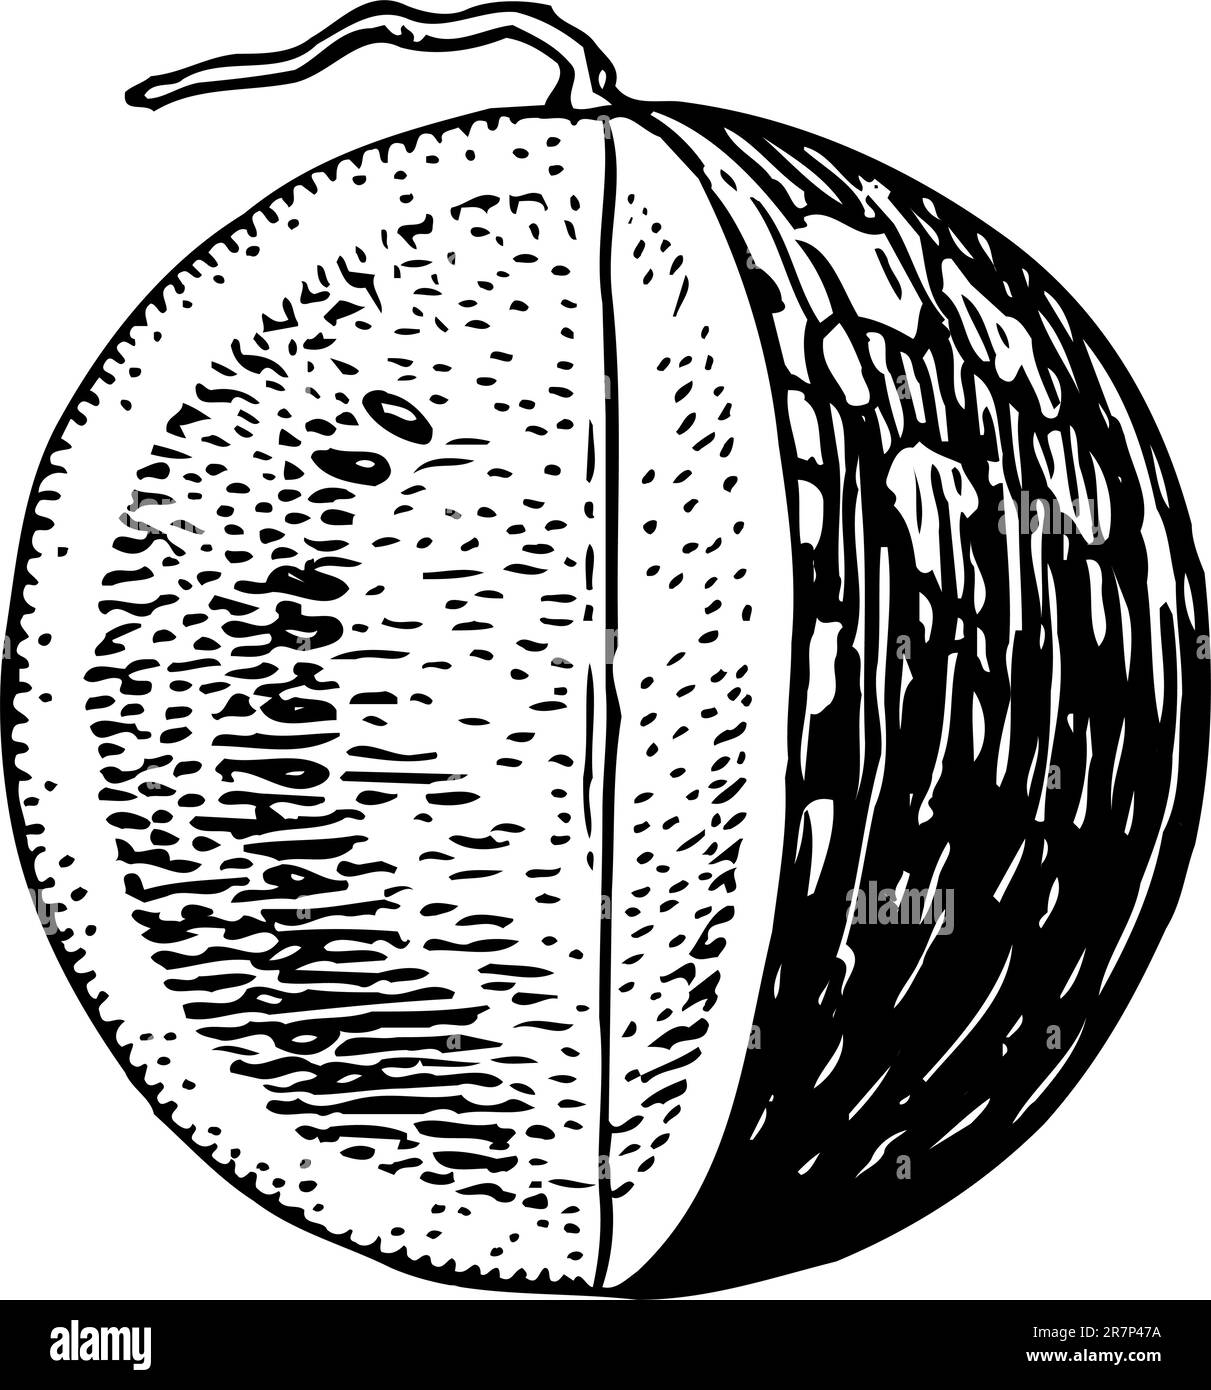 Watermelon isolated on white Illustration de Vecteur